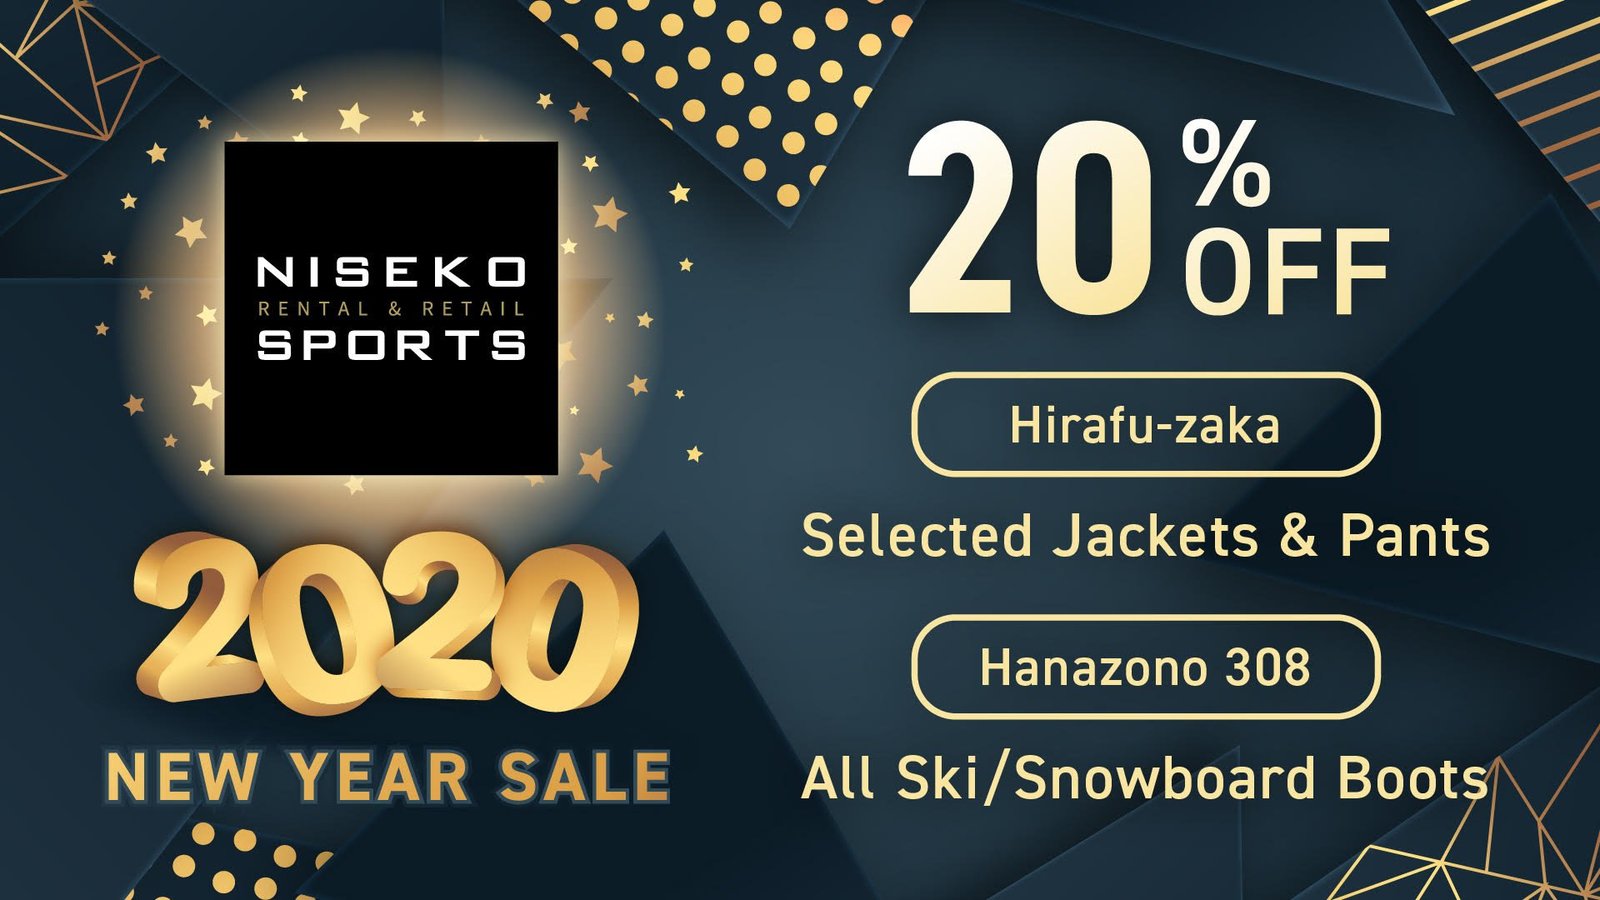 niseko sports new year sale